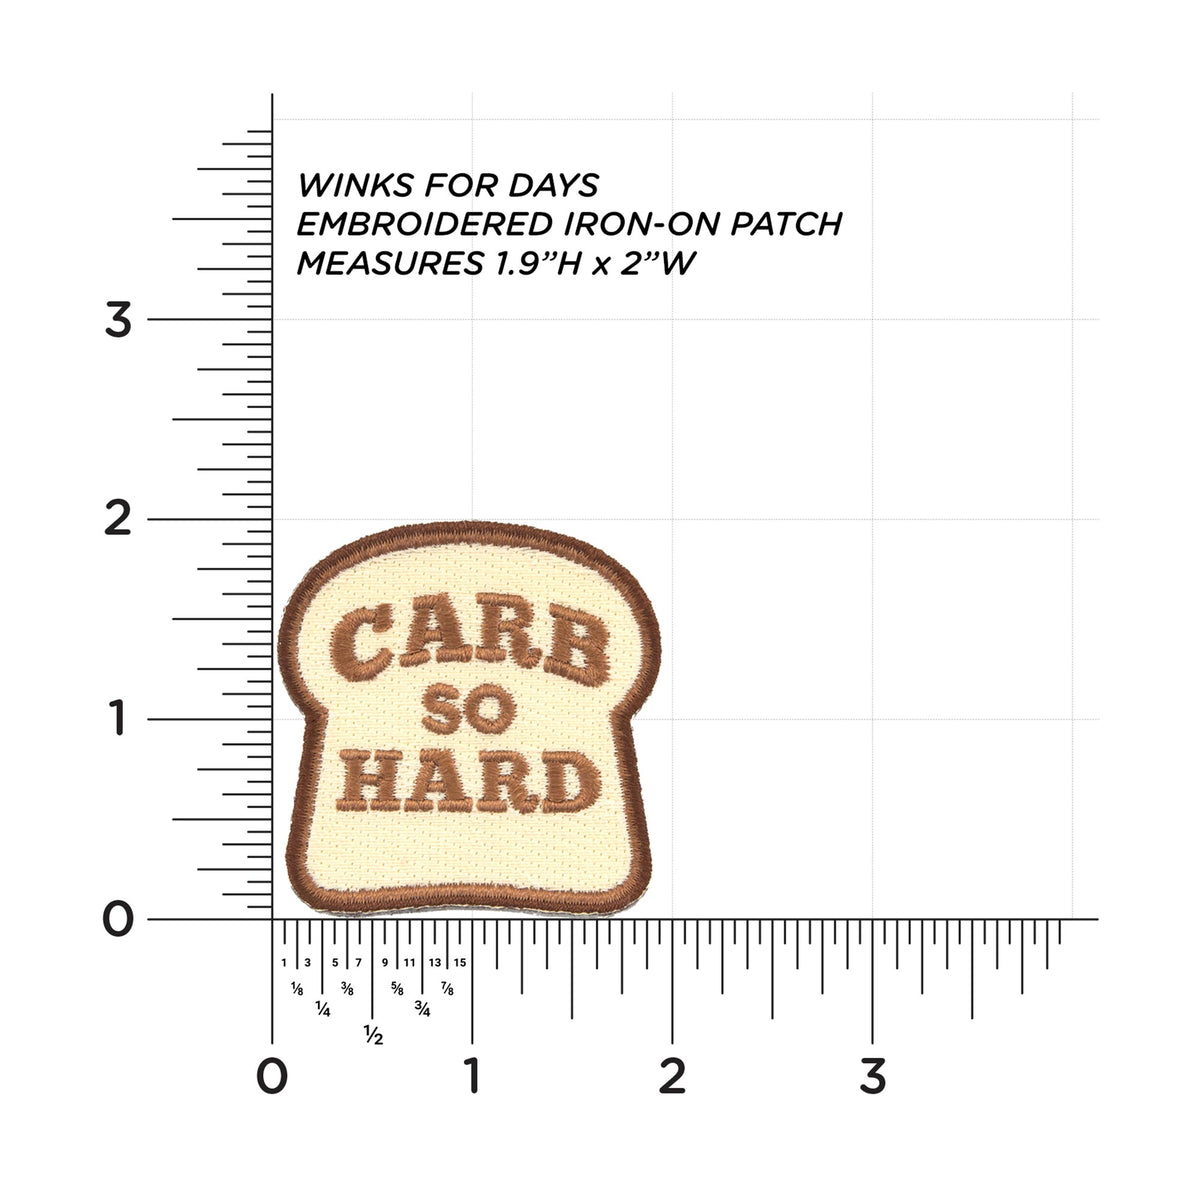 Carb So Hard measurements